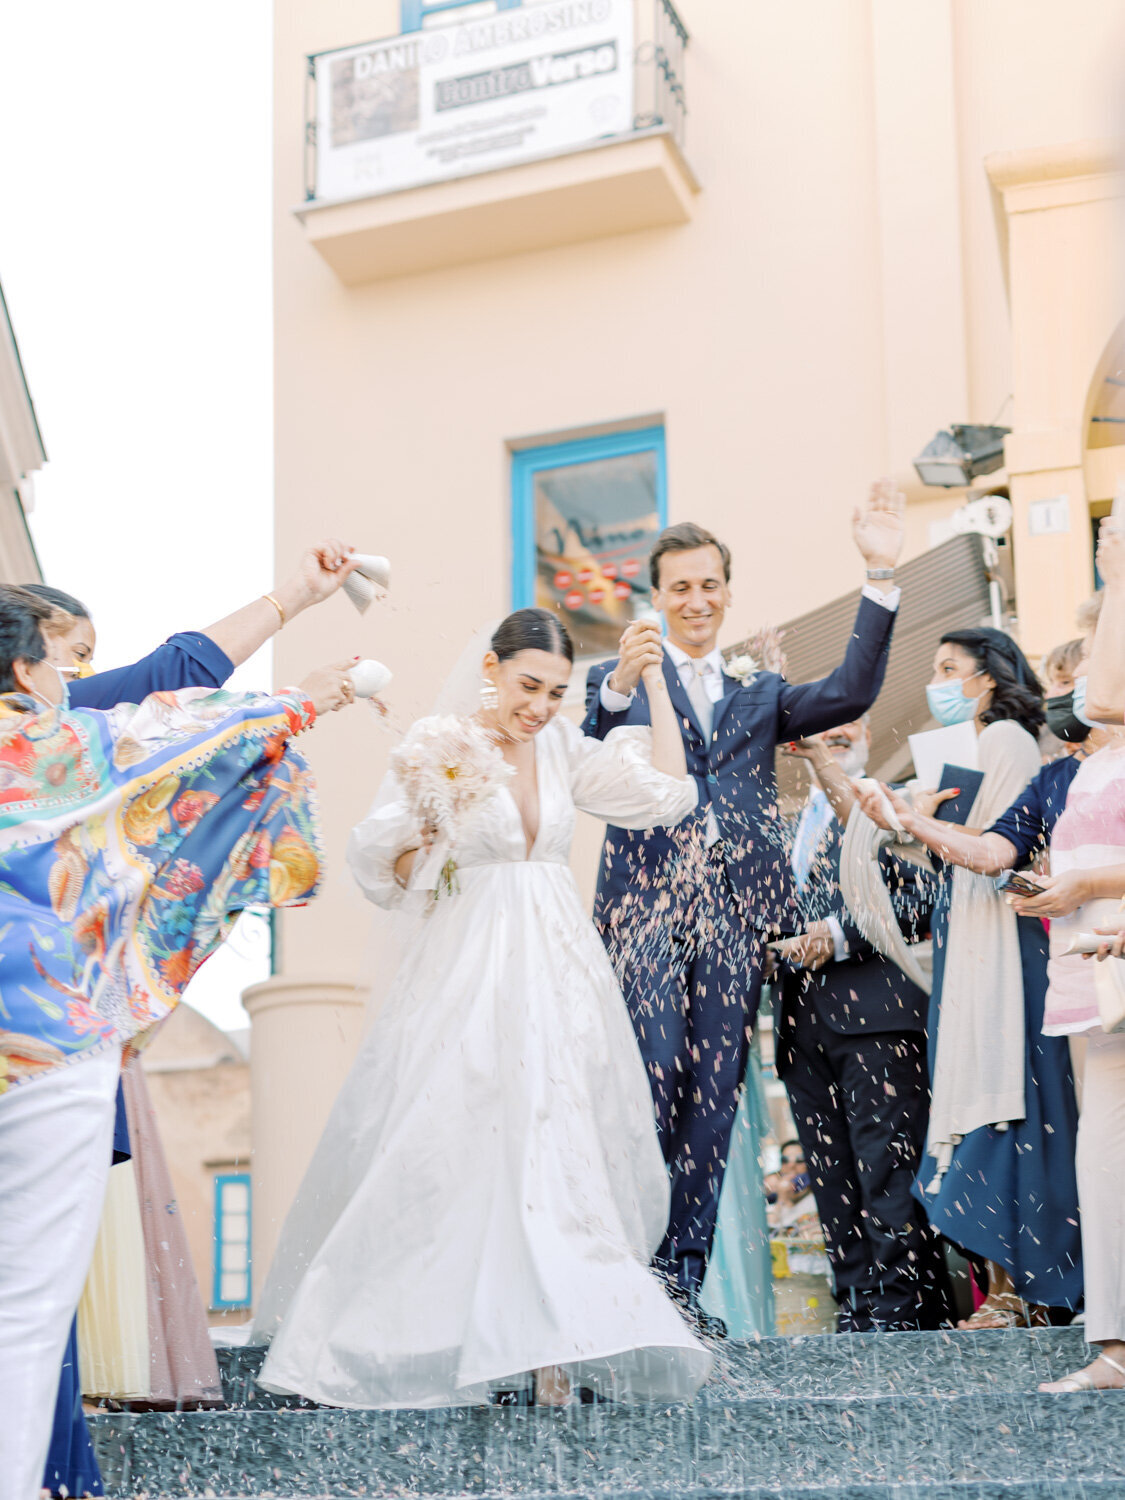 Getting married in Capri